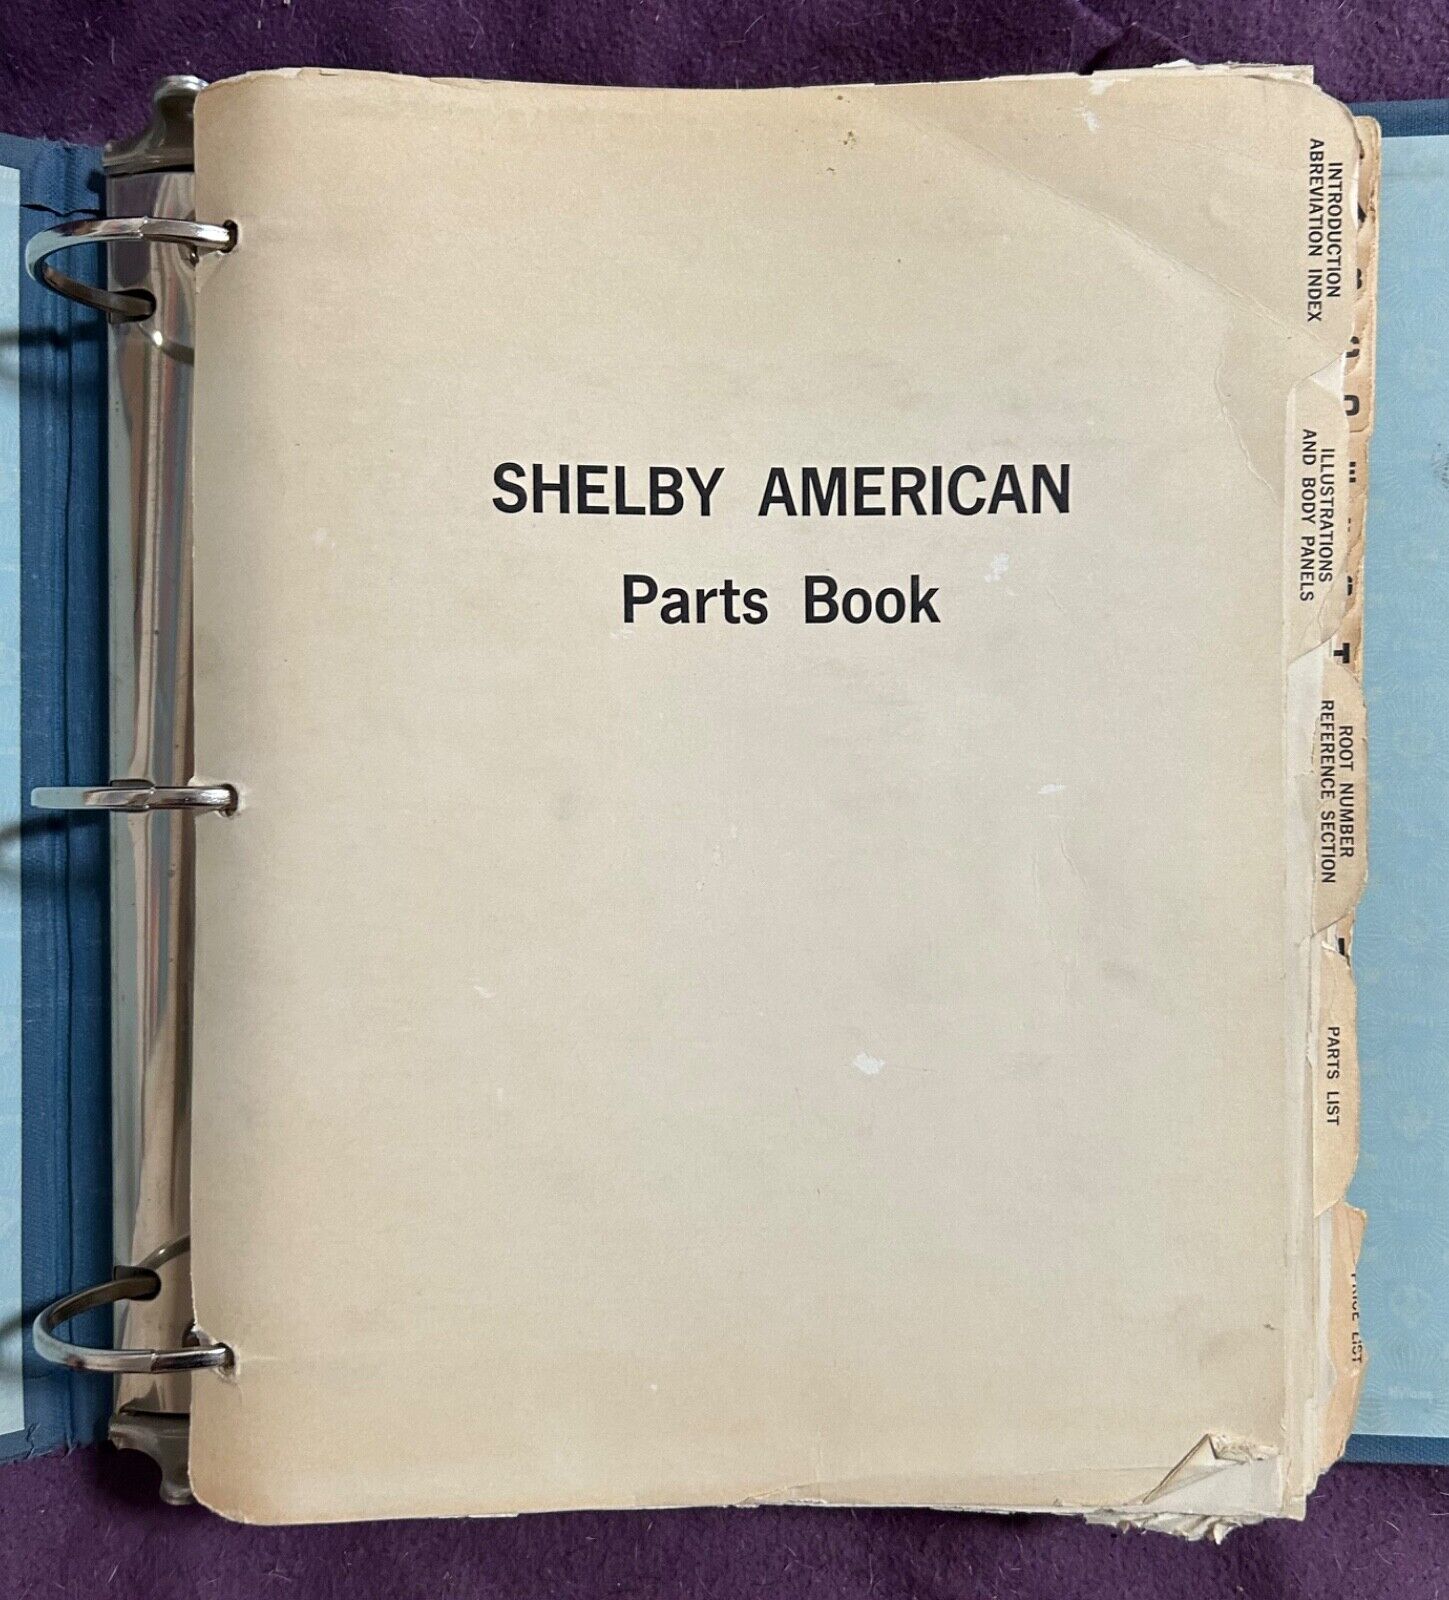 Original Shelby American AC Cobra 289 427 parts catalog + Holman Moody, Milodon